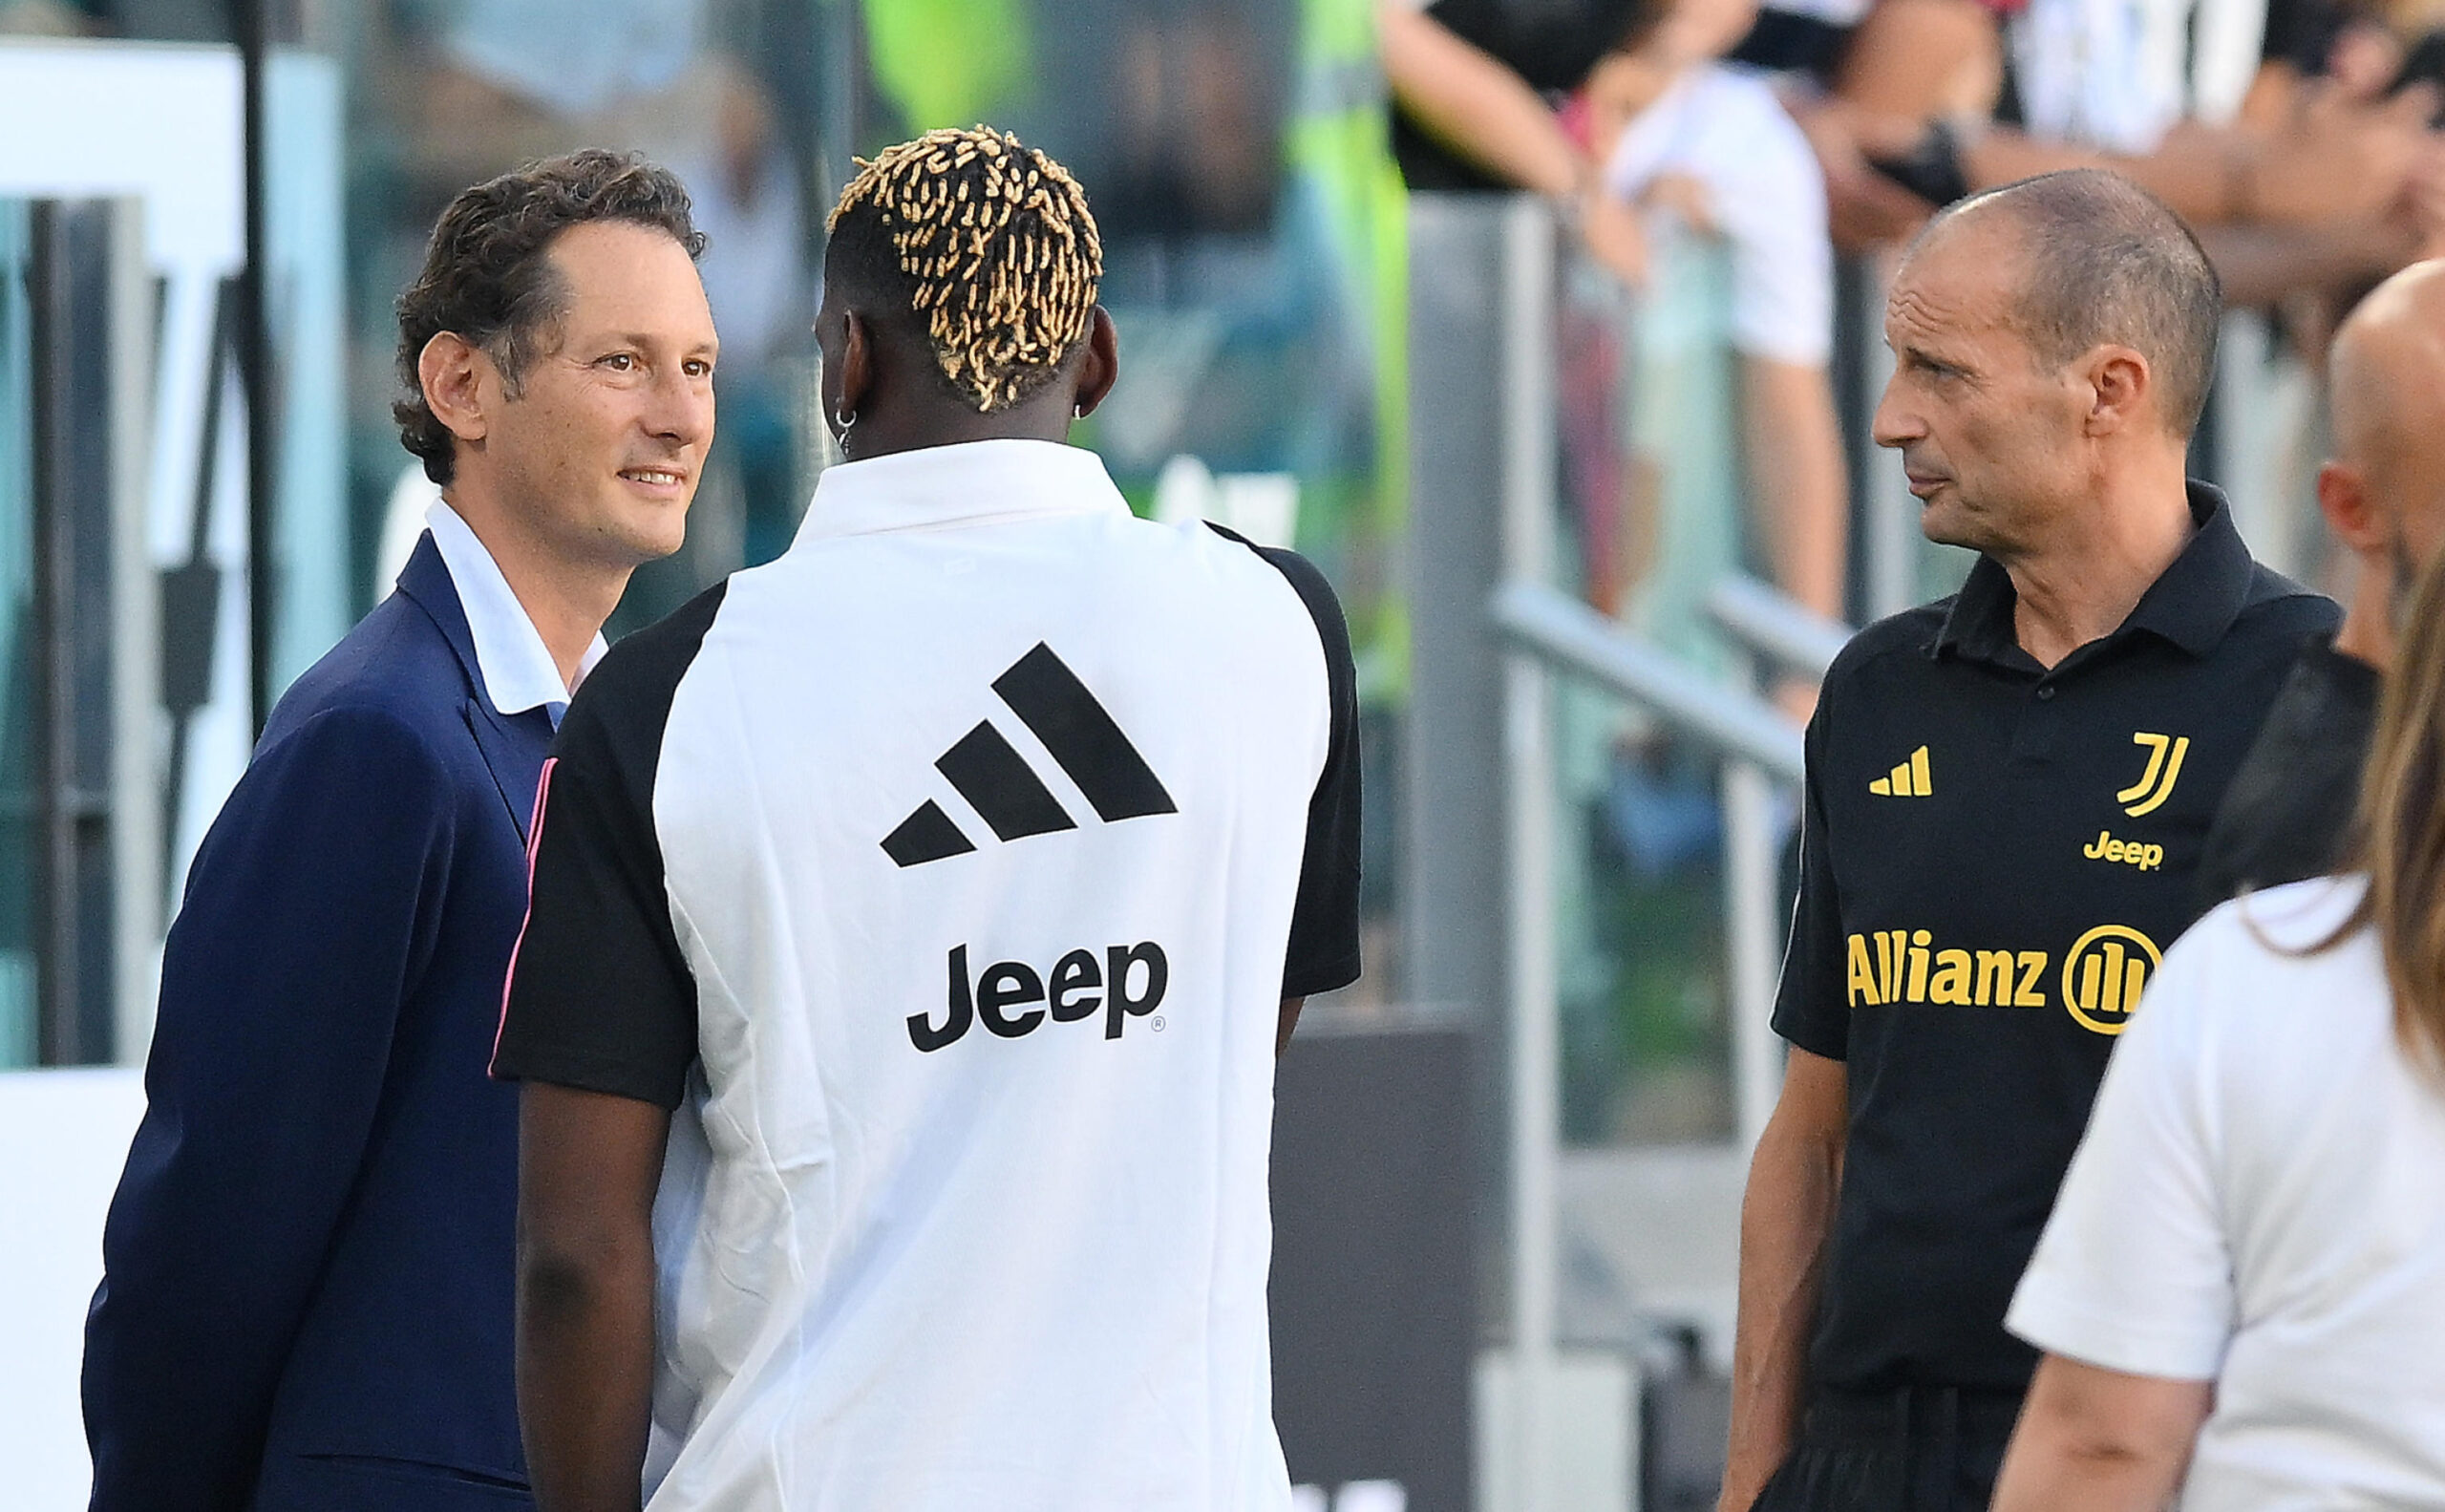 Juventus coach Massimiliano Allegri Paul Pogba and John Elkann during 